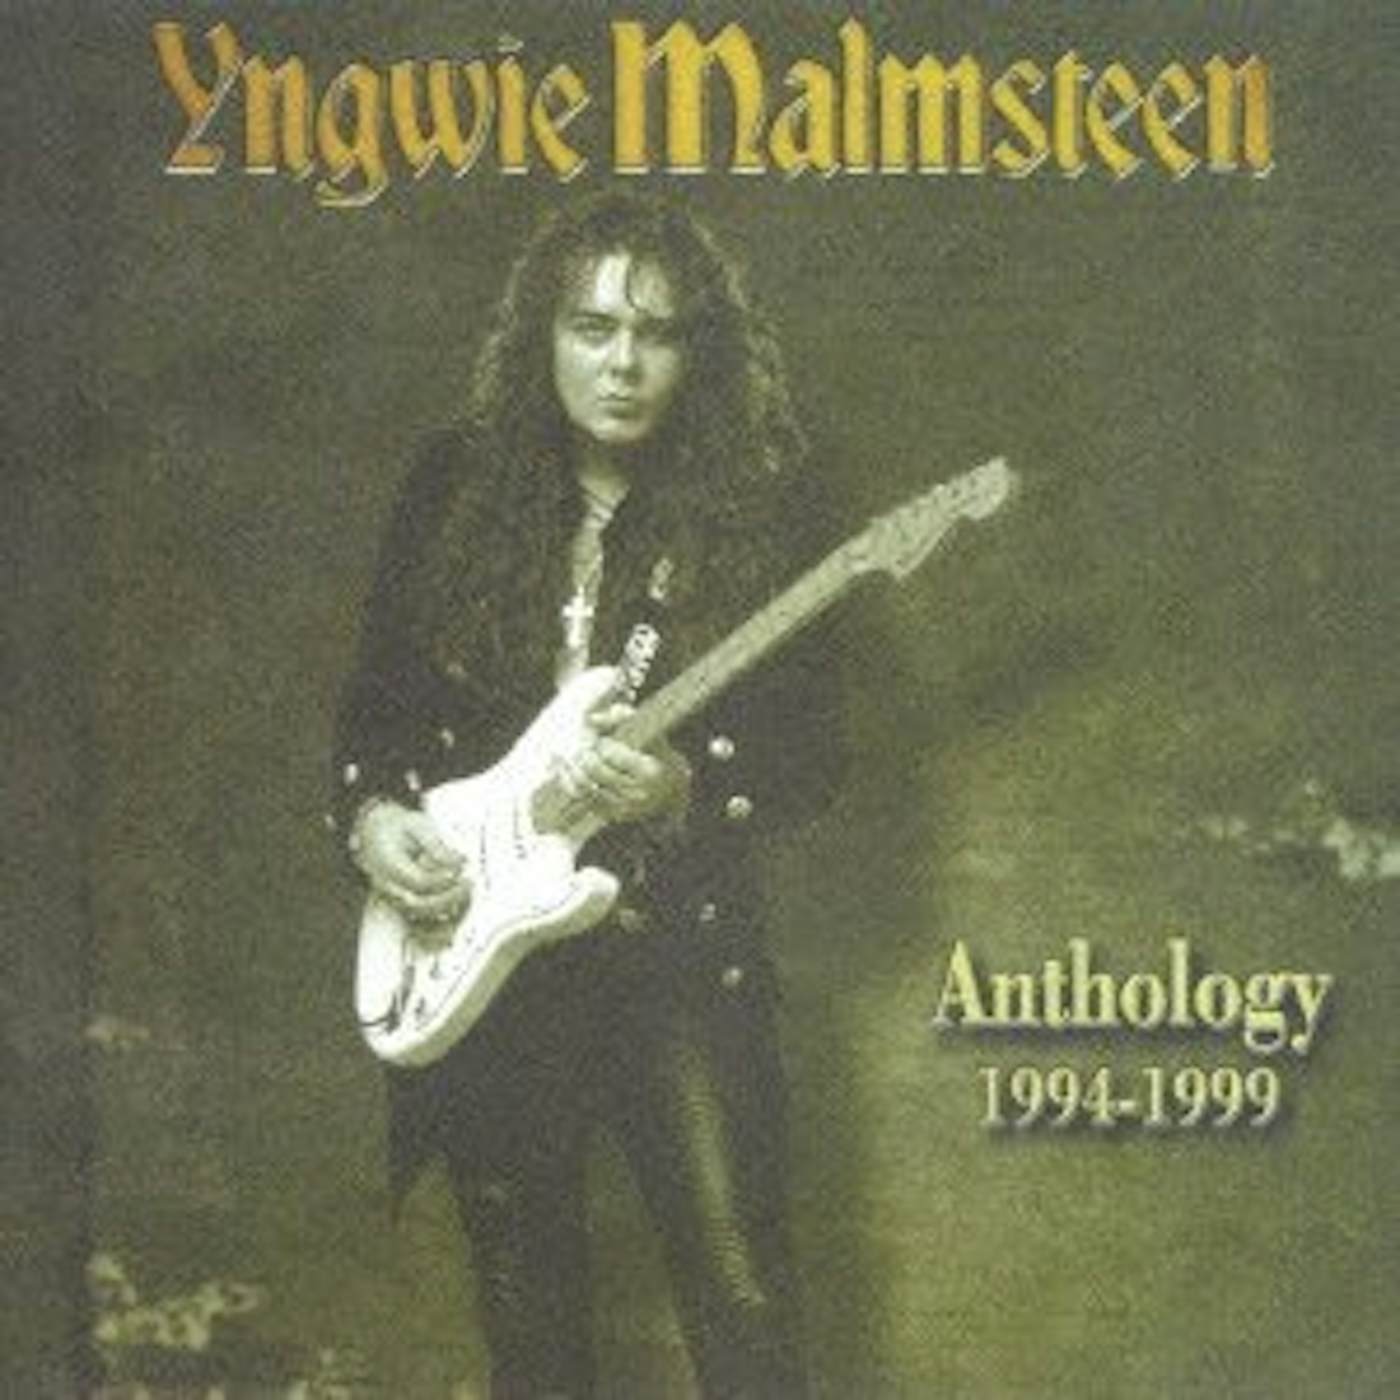 Yngwie Malmsteen ANTHOLOGY 1994 - 1999 CD